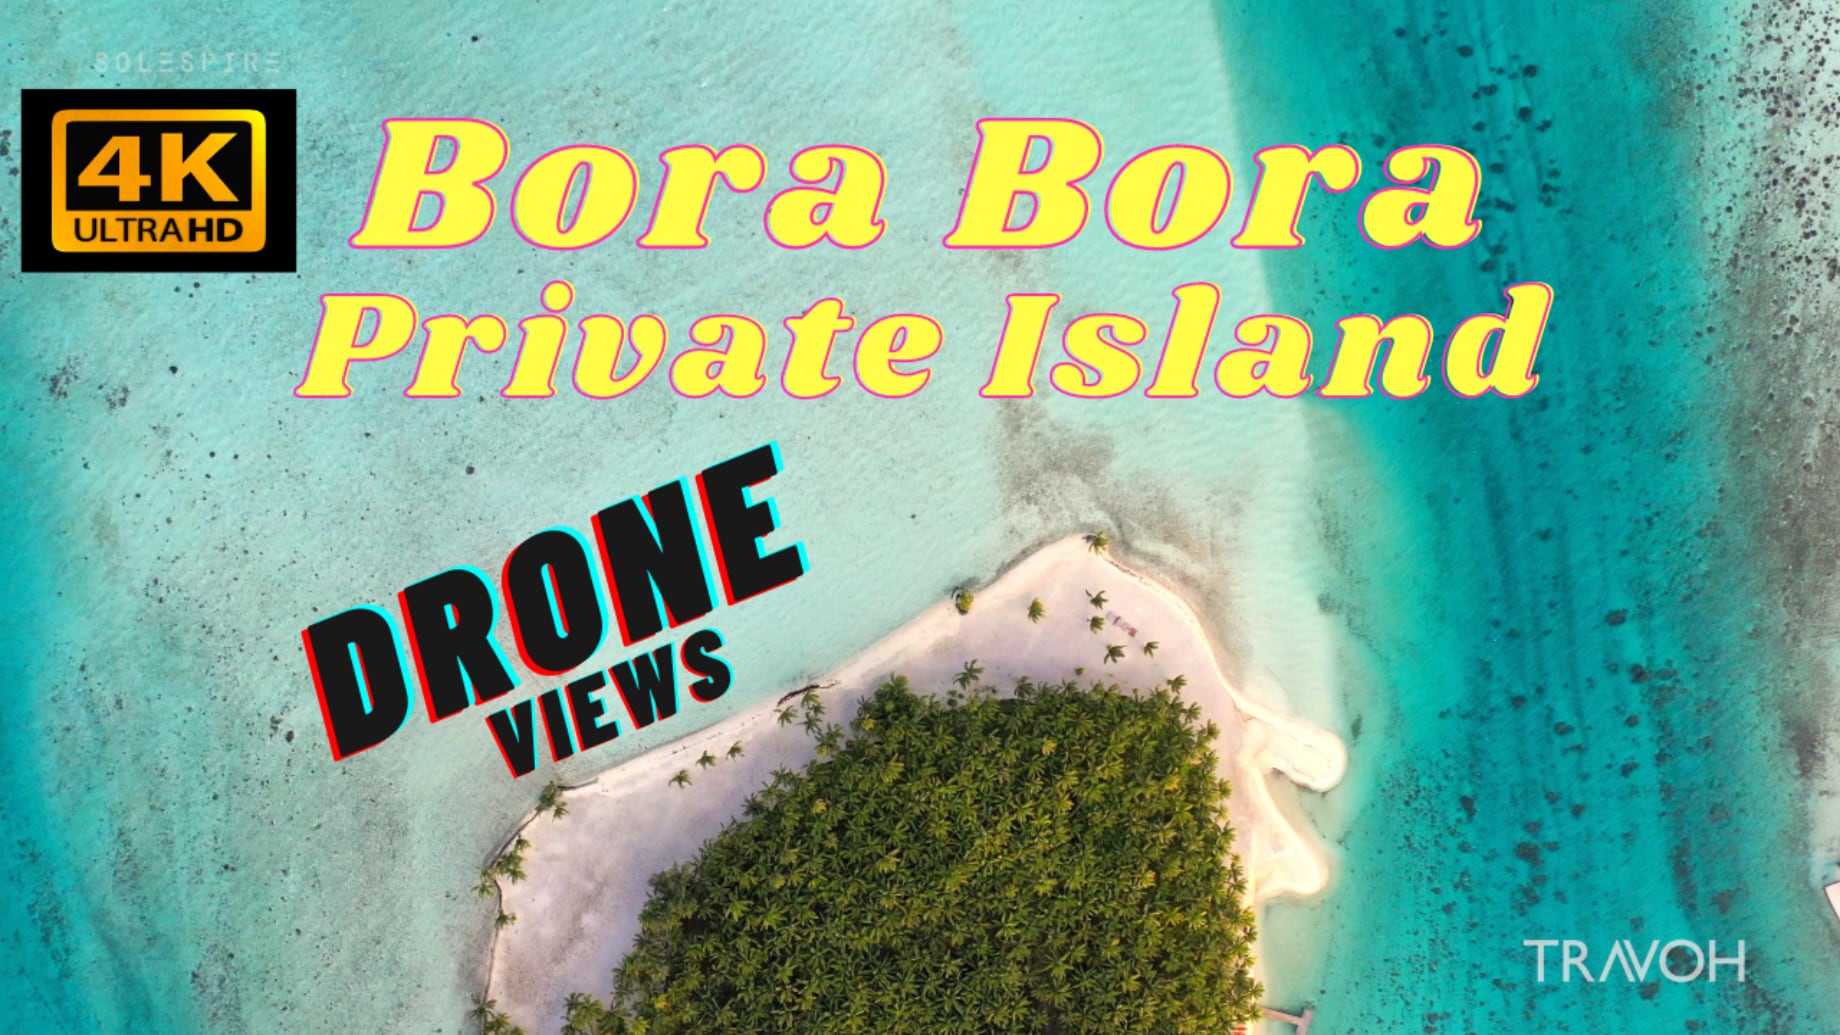 Private Island Tropical Drone Views - Motu Tane Bora Bora, French Polynesia - 4K UHD Travel